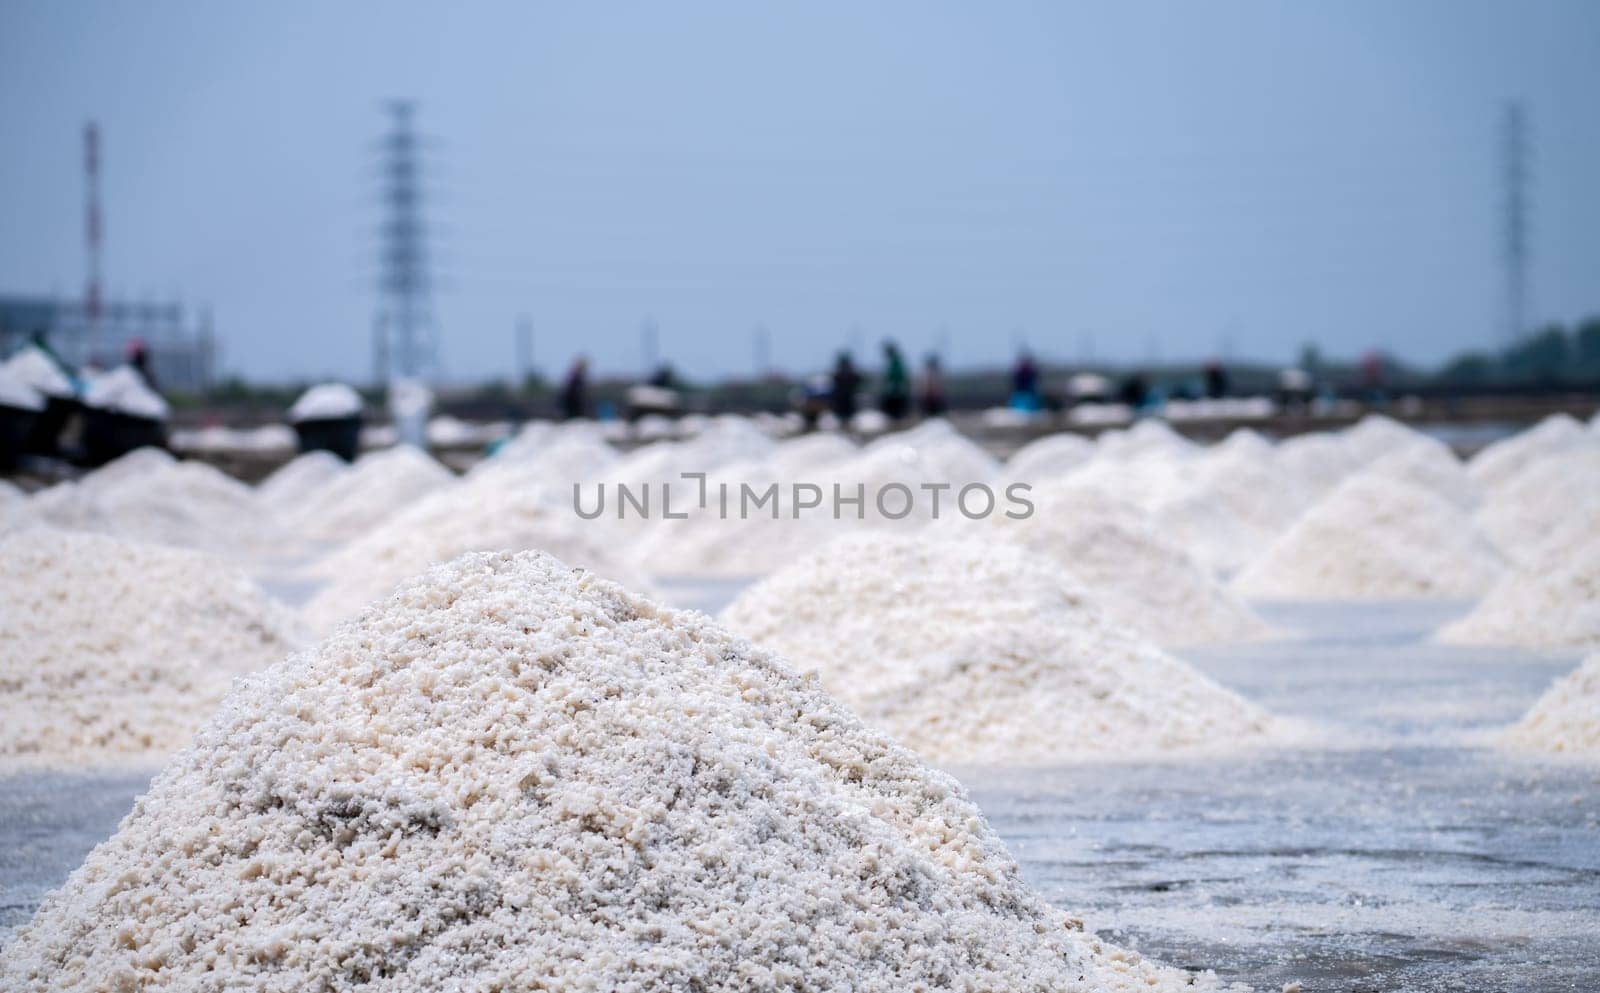 Sea salt farm and blur worker working on farm. Brine salt. Raw material of salt industrial. Sodium Chloride. Evaporation and crystallization of sea water. White salt harvesting. Agriculture industry.